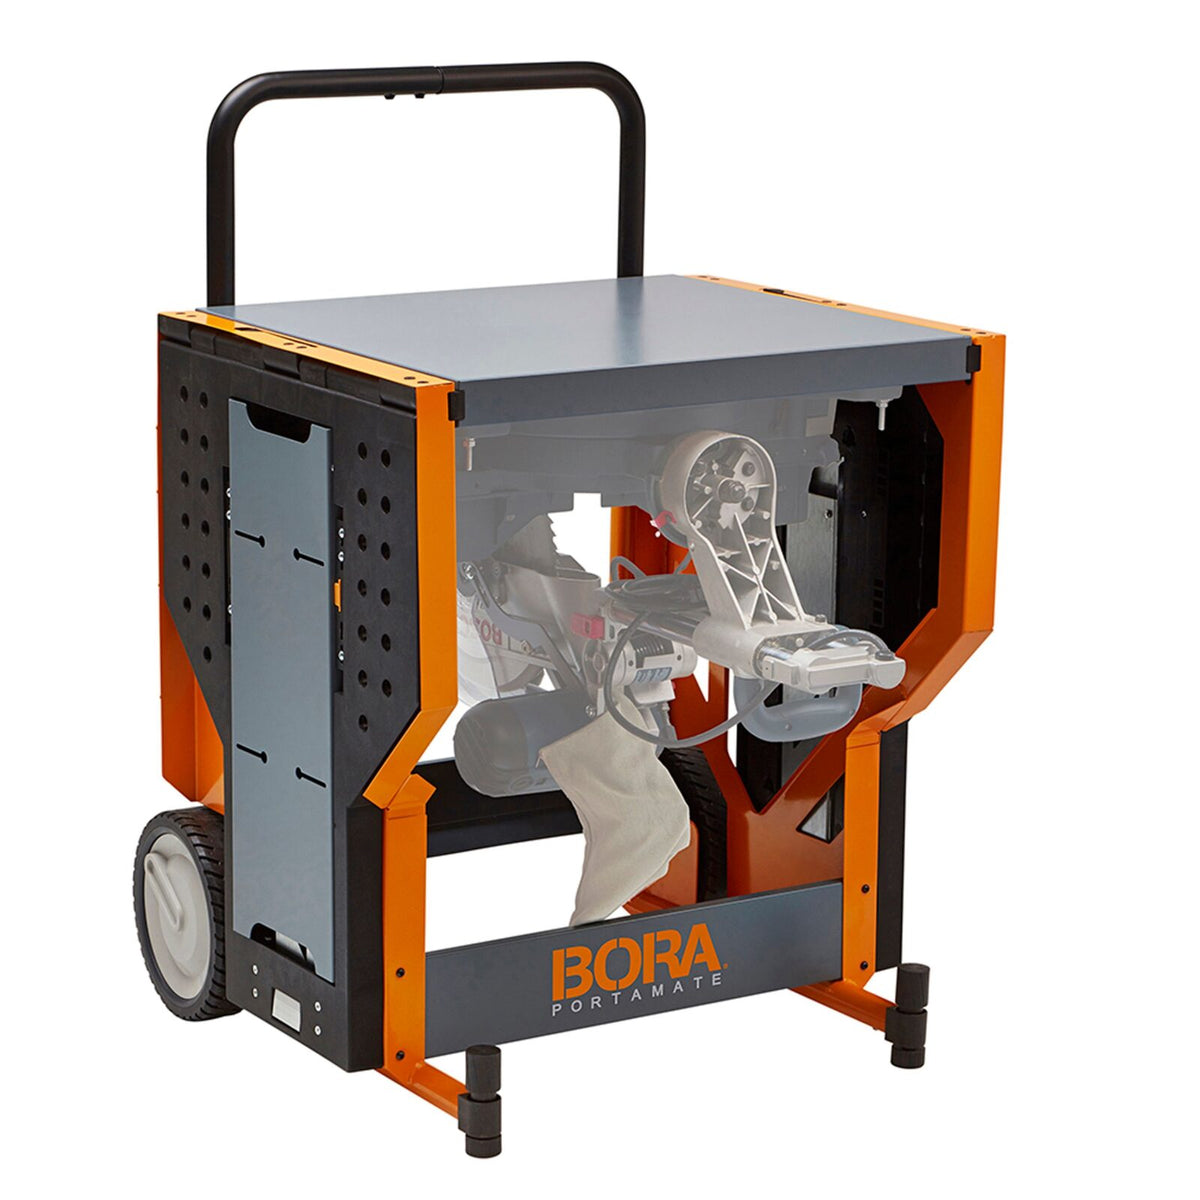 Bora PM-8000 Portamate Portable Miter Saw Station, Orange, 31 Inch x 29 Inch x 34 Inch